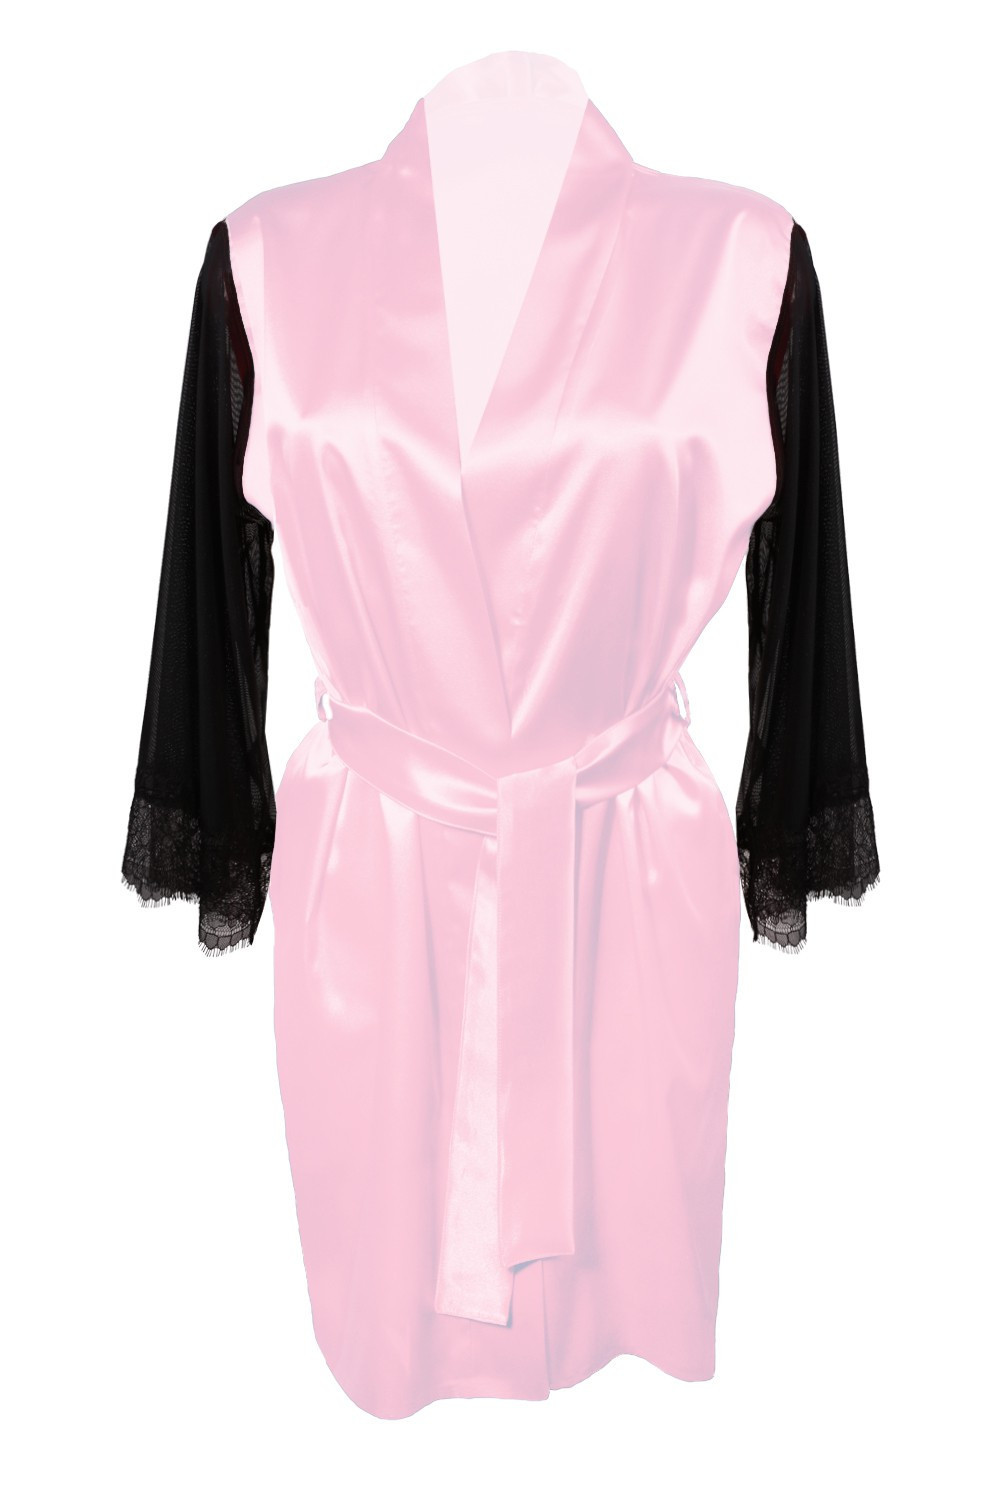 Housecoat model 18227289 Pink XL Pink - DKaren